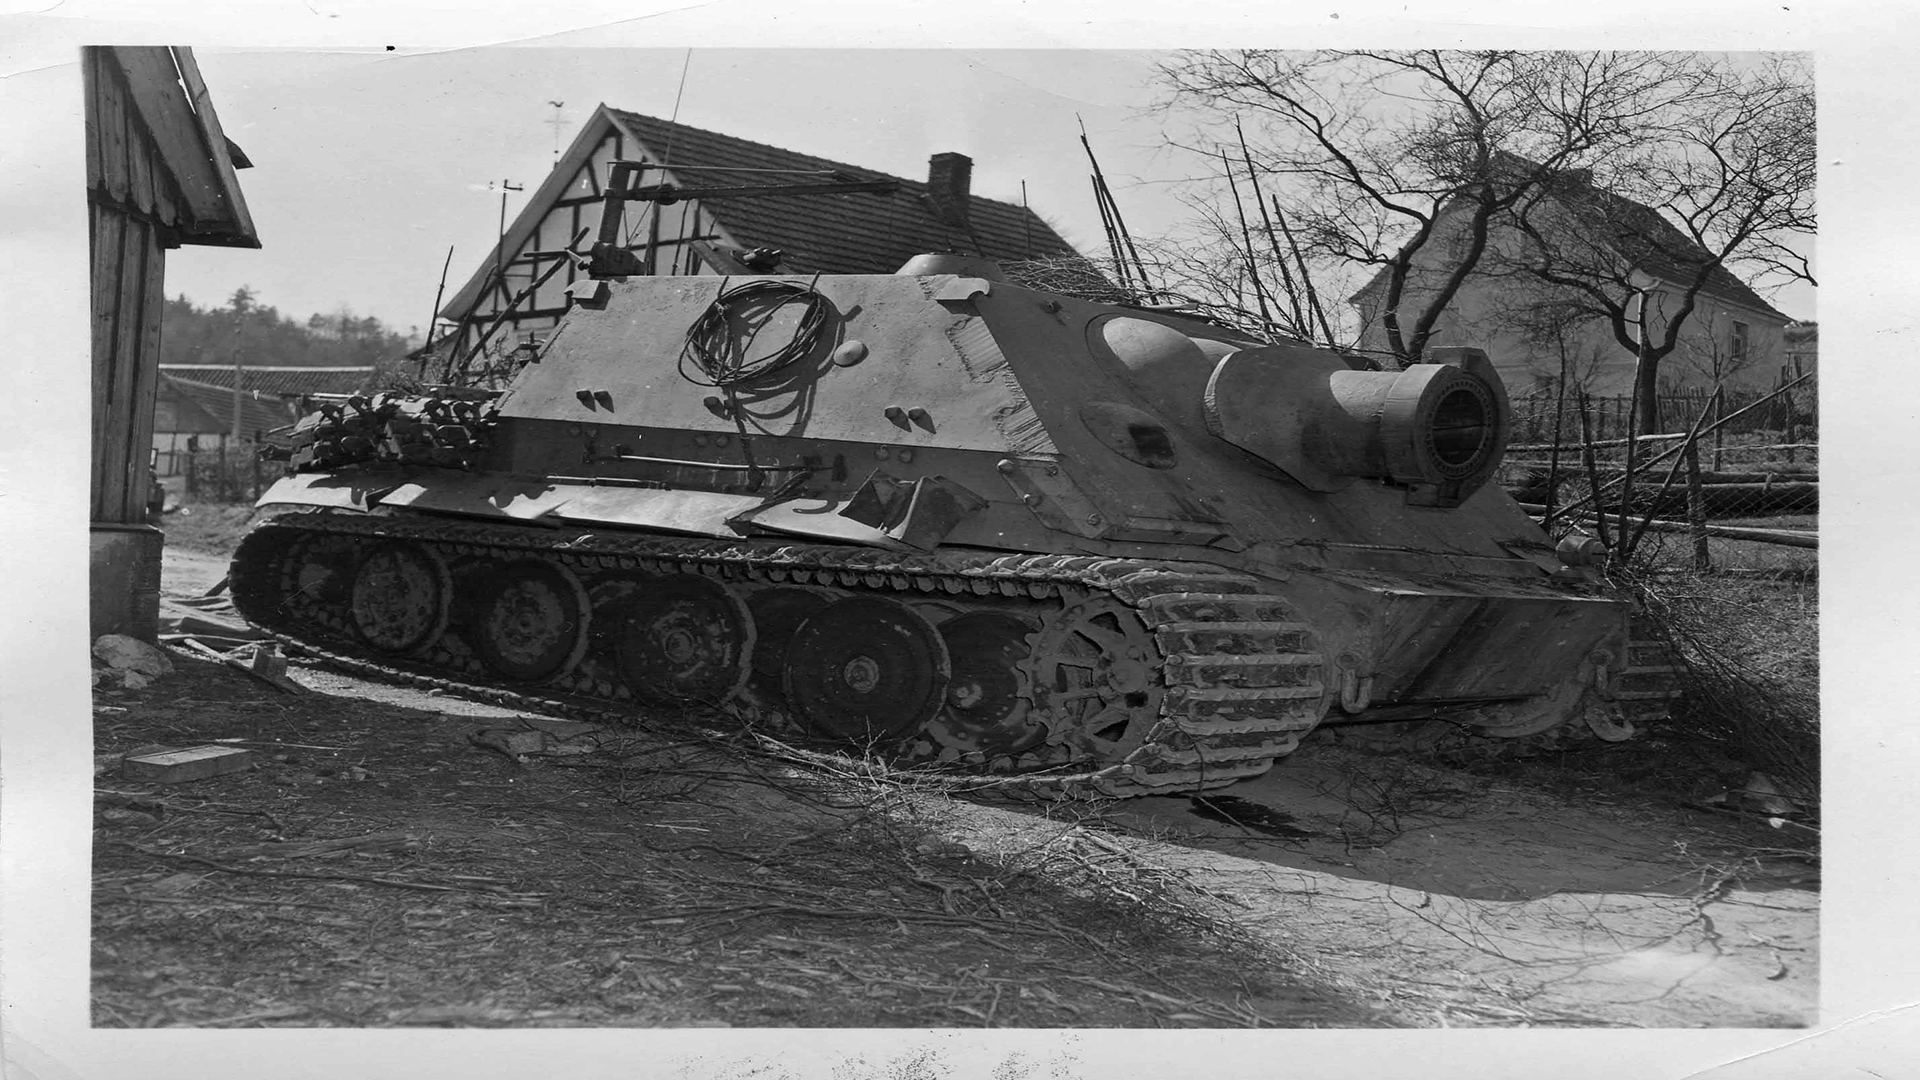 General 1920x1080 Sturmtiger World War II military vehicle tank monochrome house frontal view